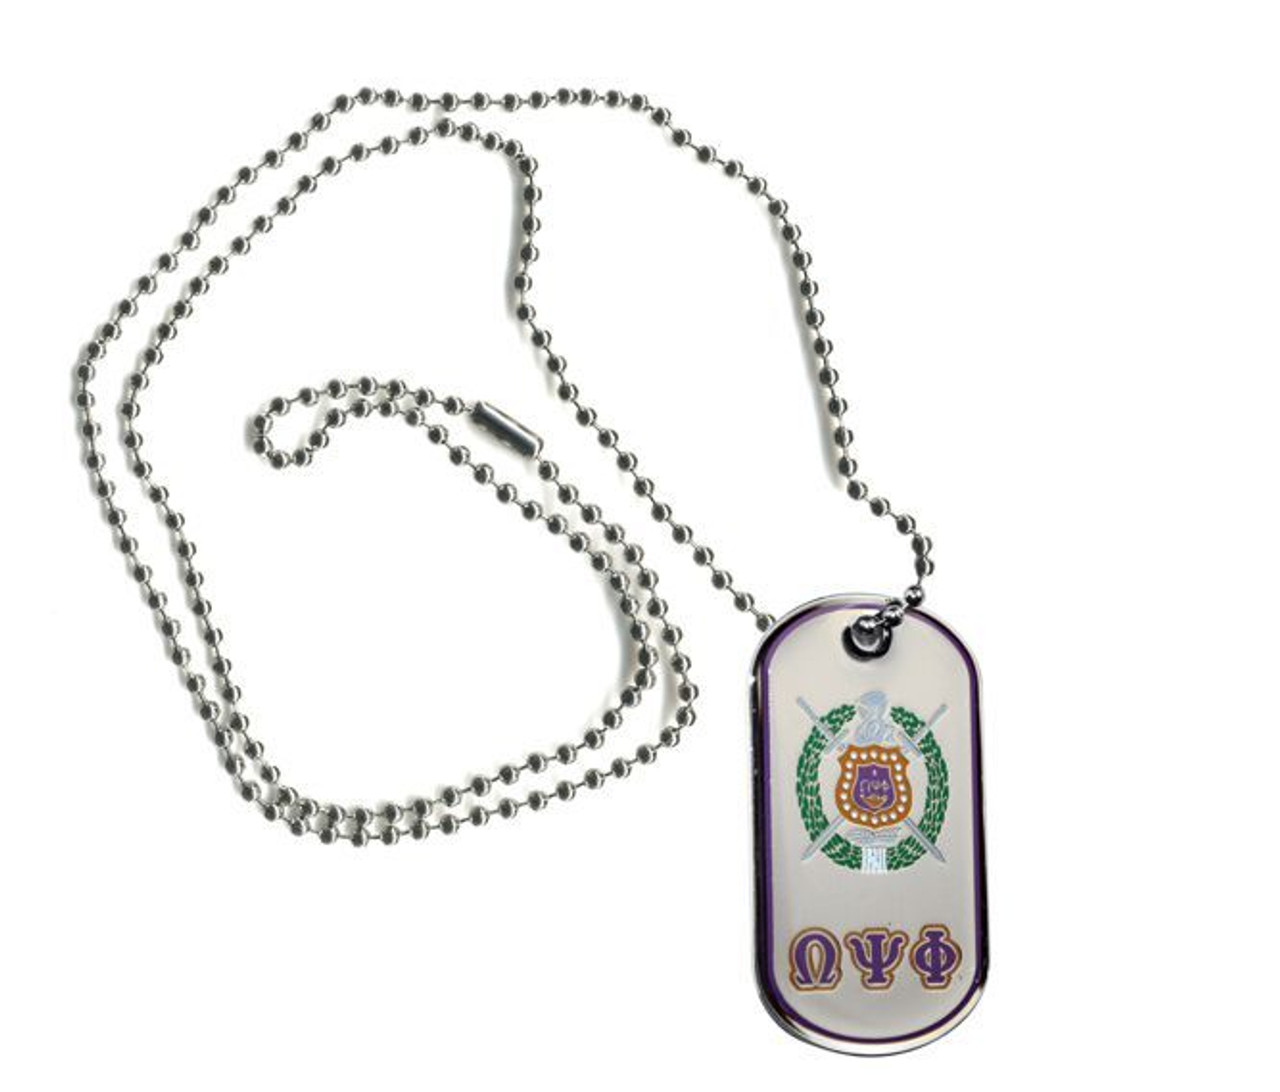 Omega Psi Phi Medallions | Cufflinks |... - Arvensis Jewelry | Facebook